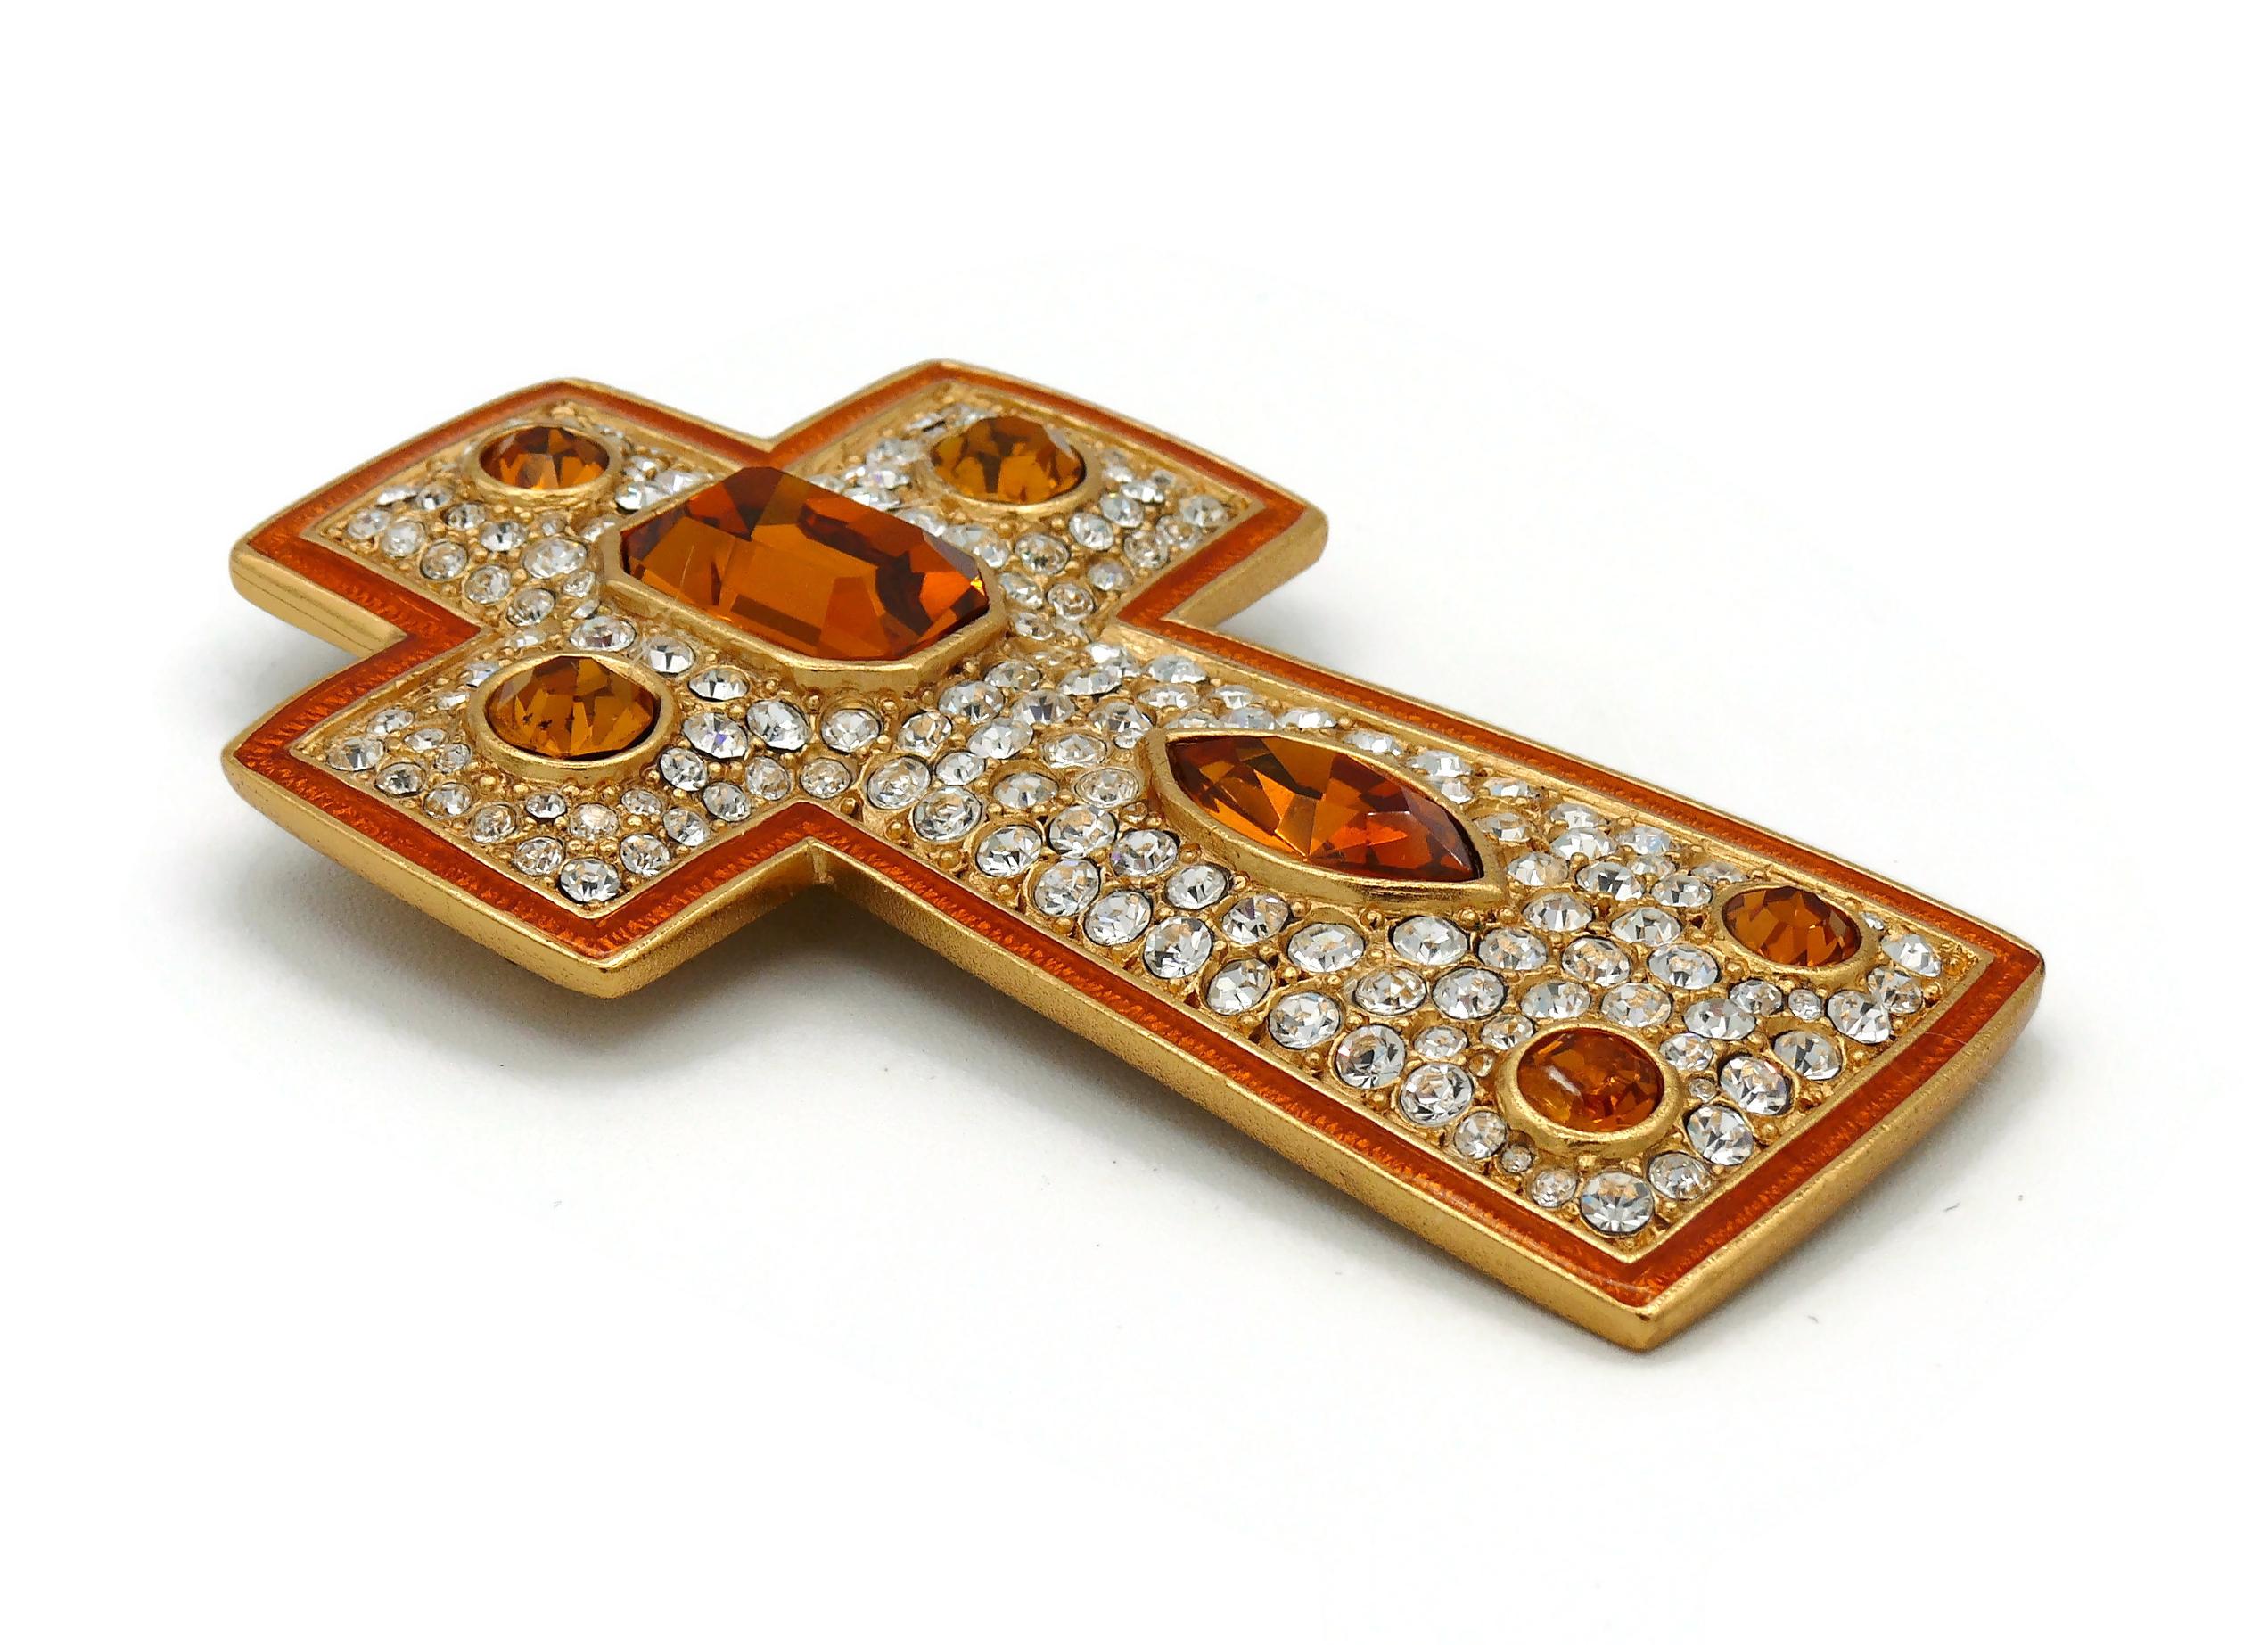 Christian Dior Boutique Vintage Massive Jewelled Cross Brooch Pendant For Sale 1